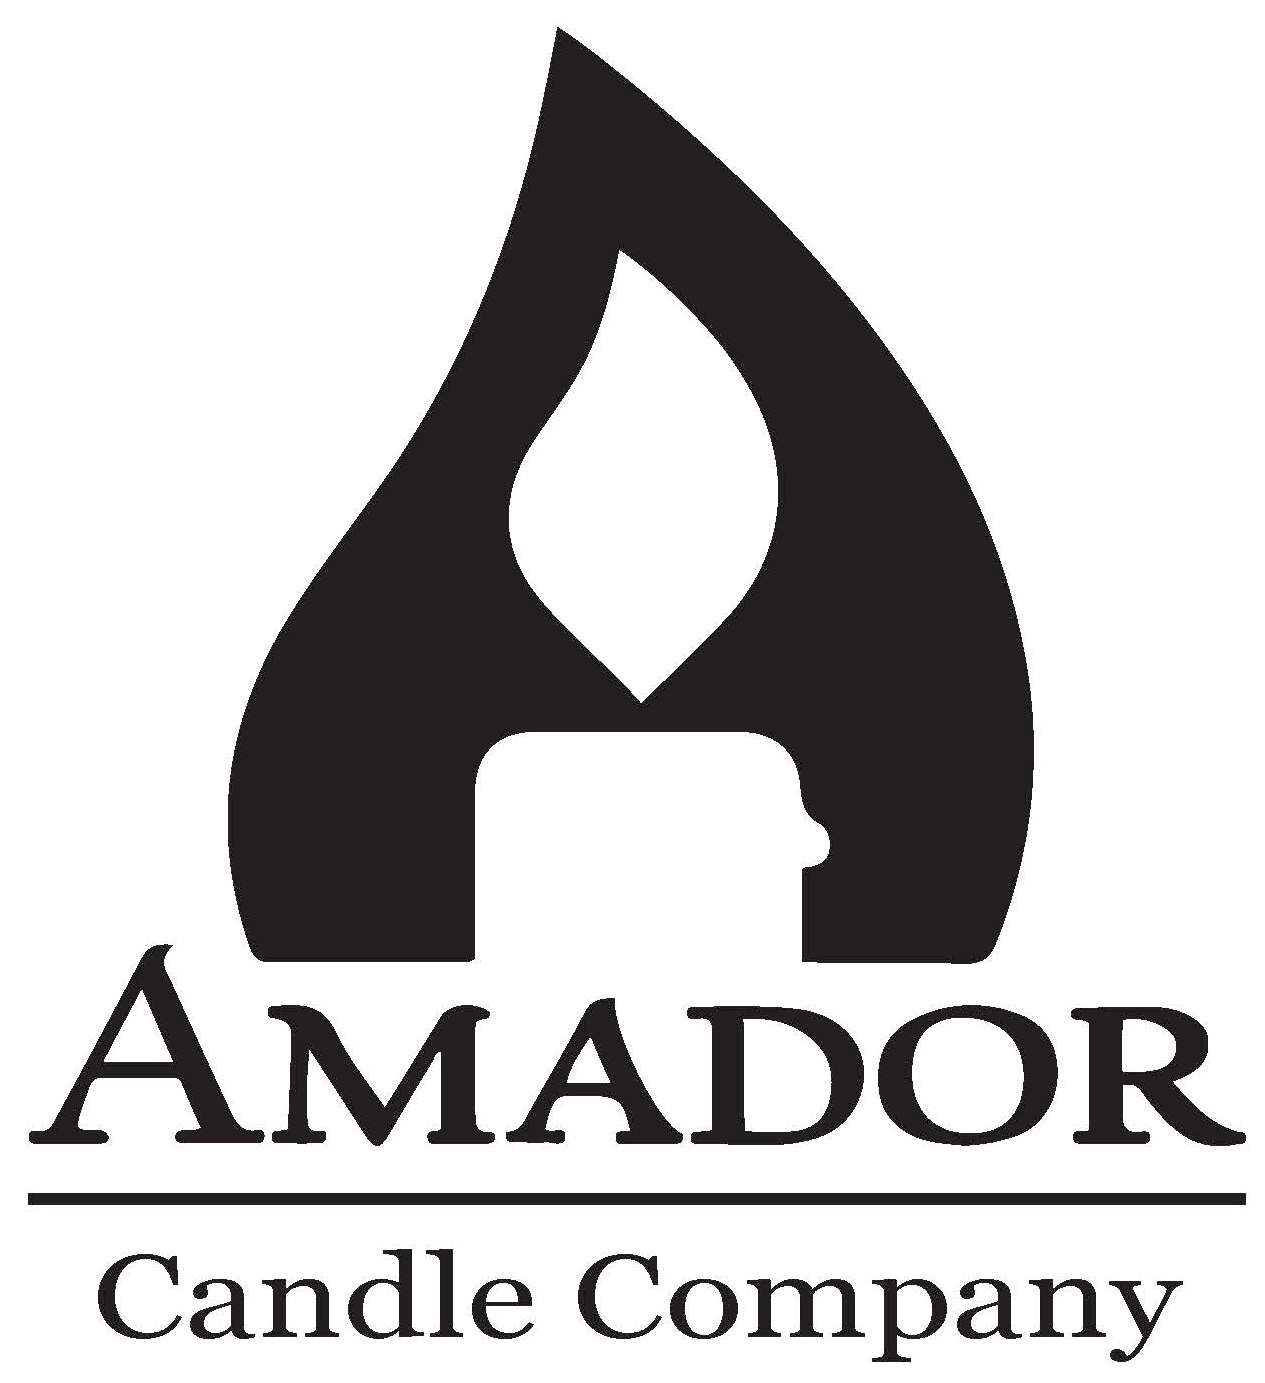 Amador Candle Company